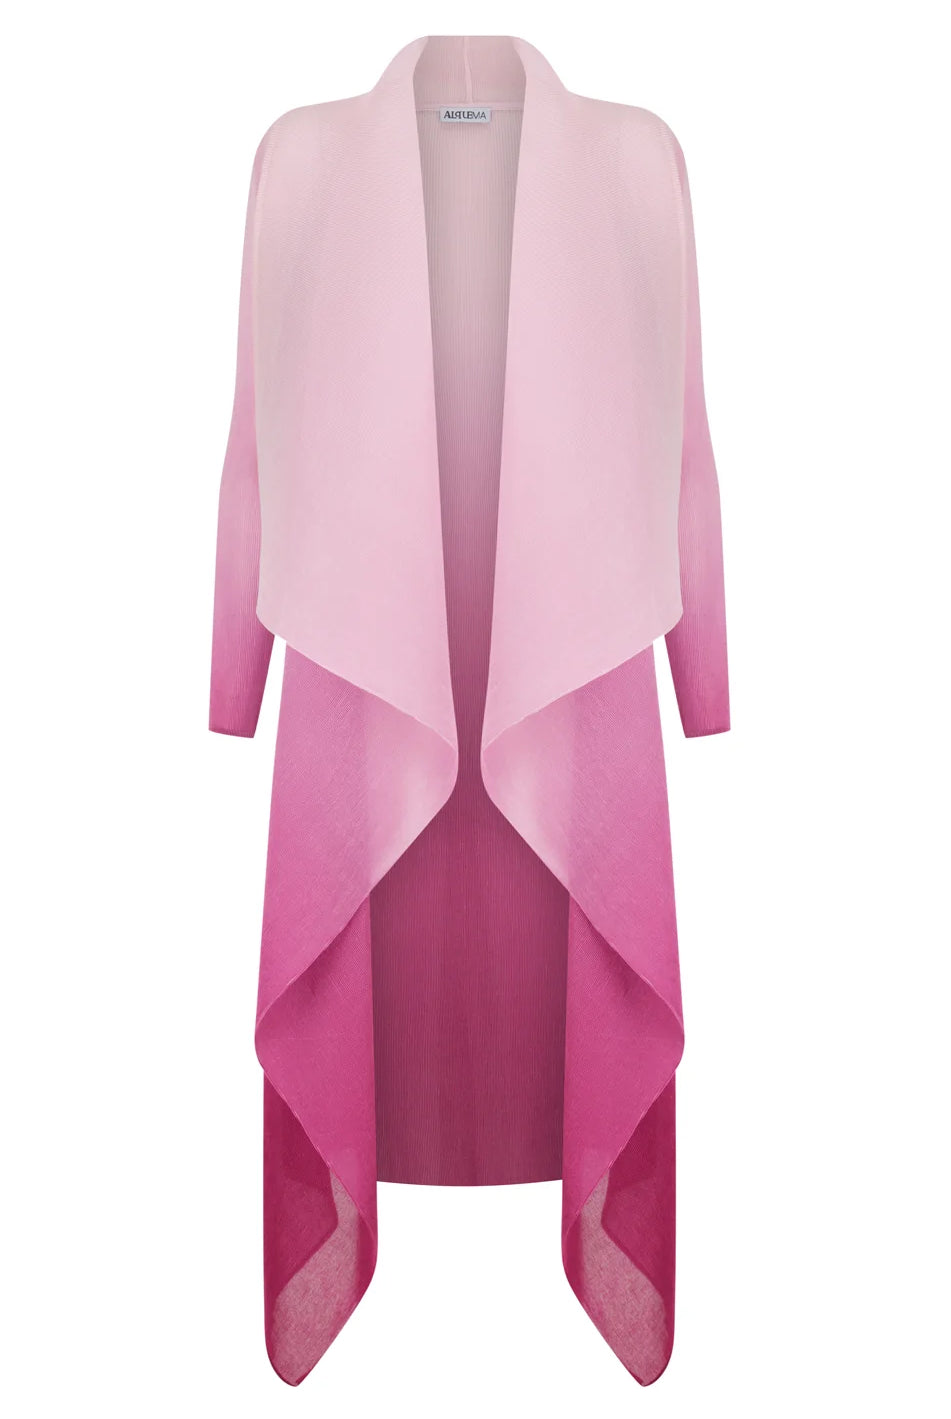 ALQUEMA - Collare Coat Ombre Smoky Rose - Magpie Style